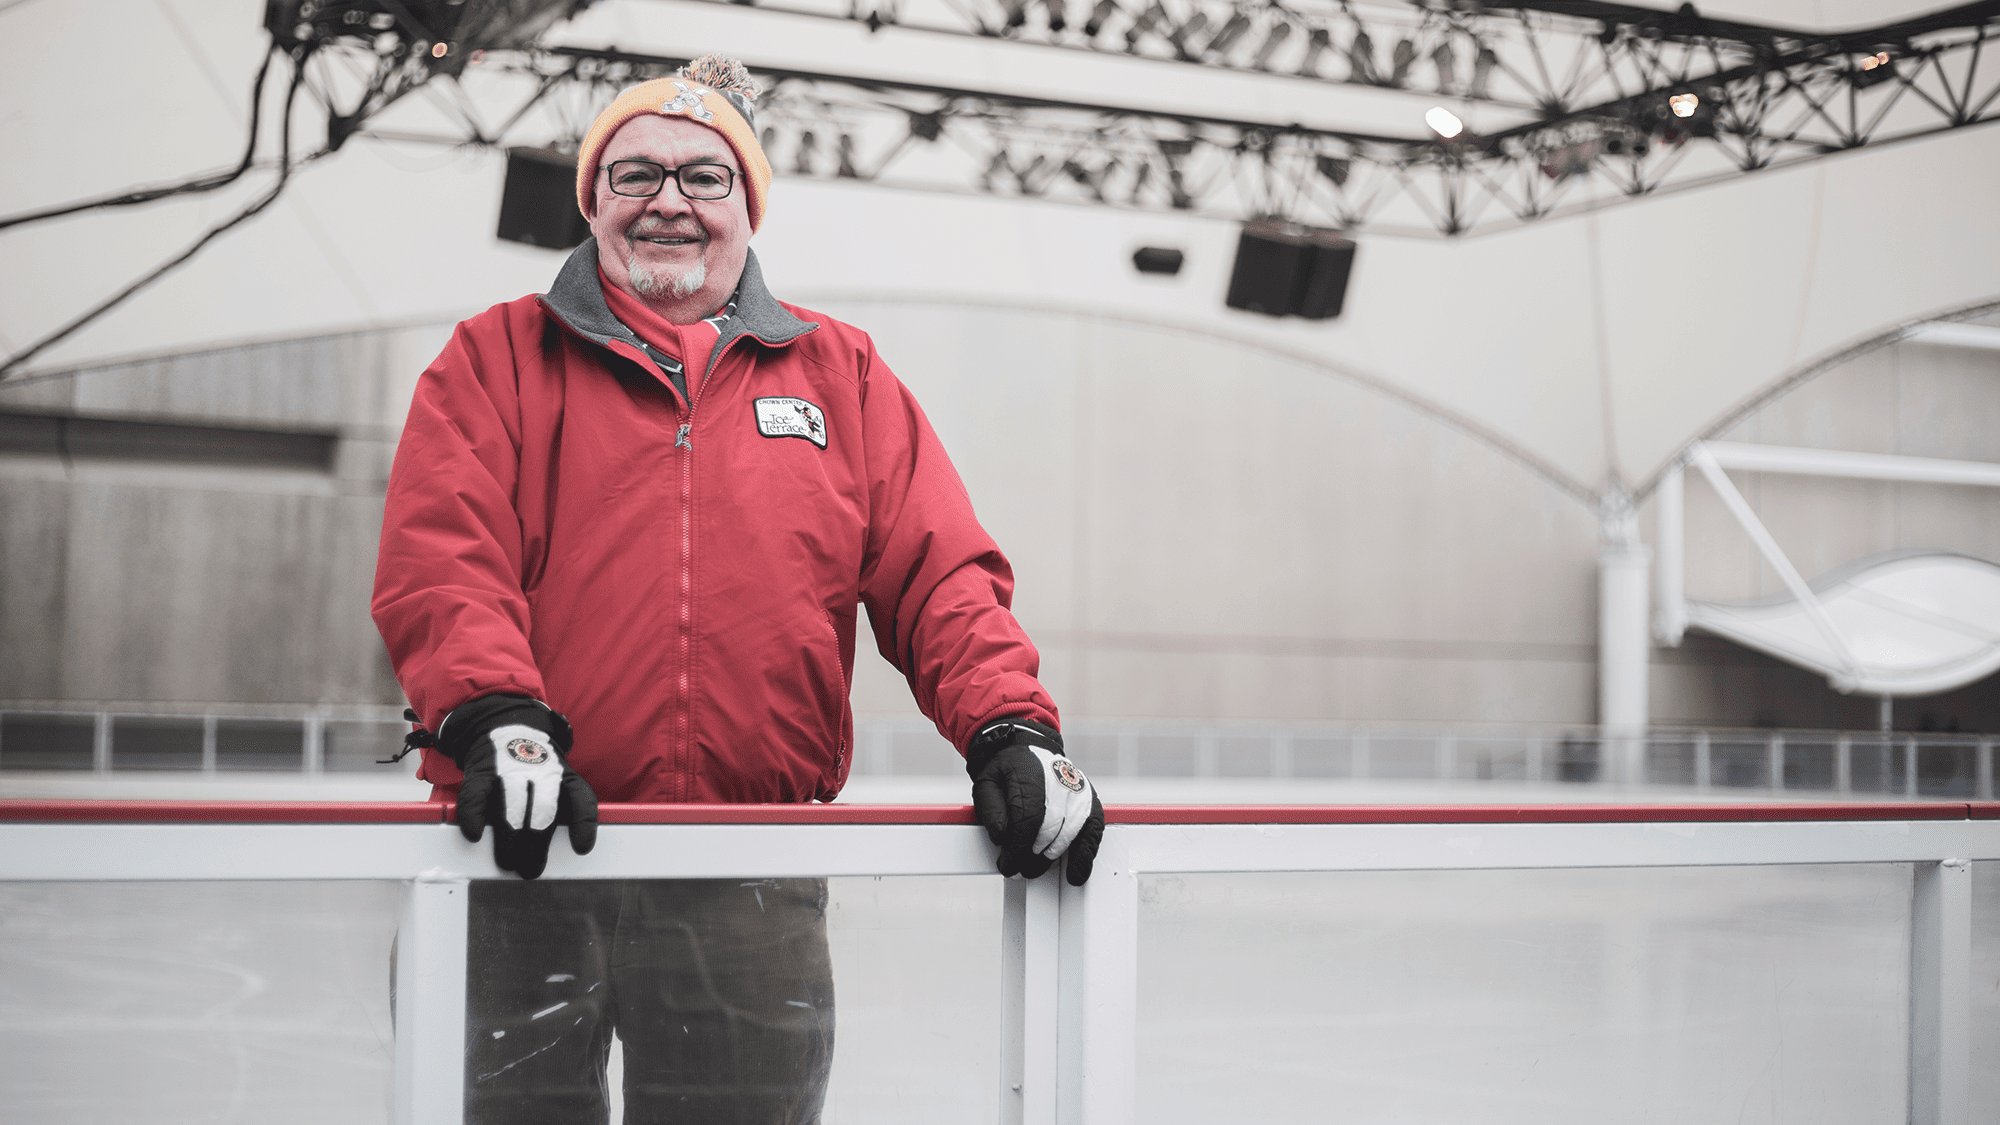 Crown Center ice rink attendant Joe Lynch